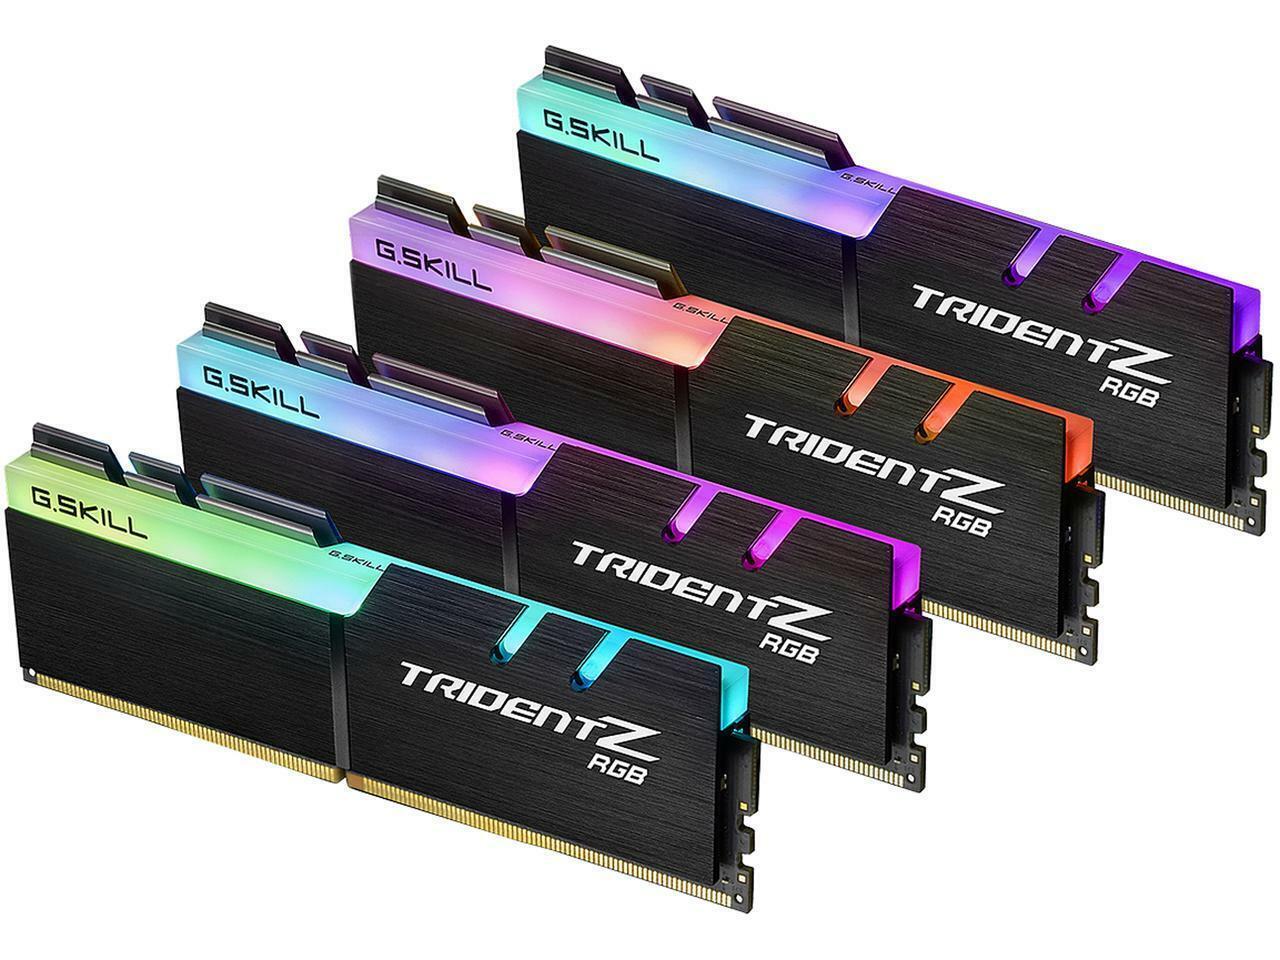 G.SKILL TridentZ RGB 32GB(4x8GB) DDR4 3200 (PC4 25600) Memory F4-3200C16Q-32GTZR